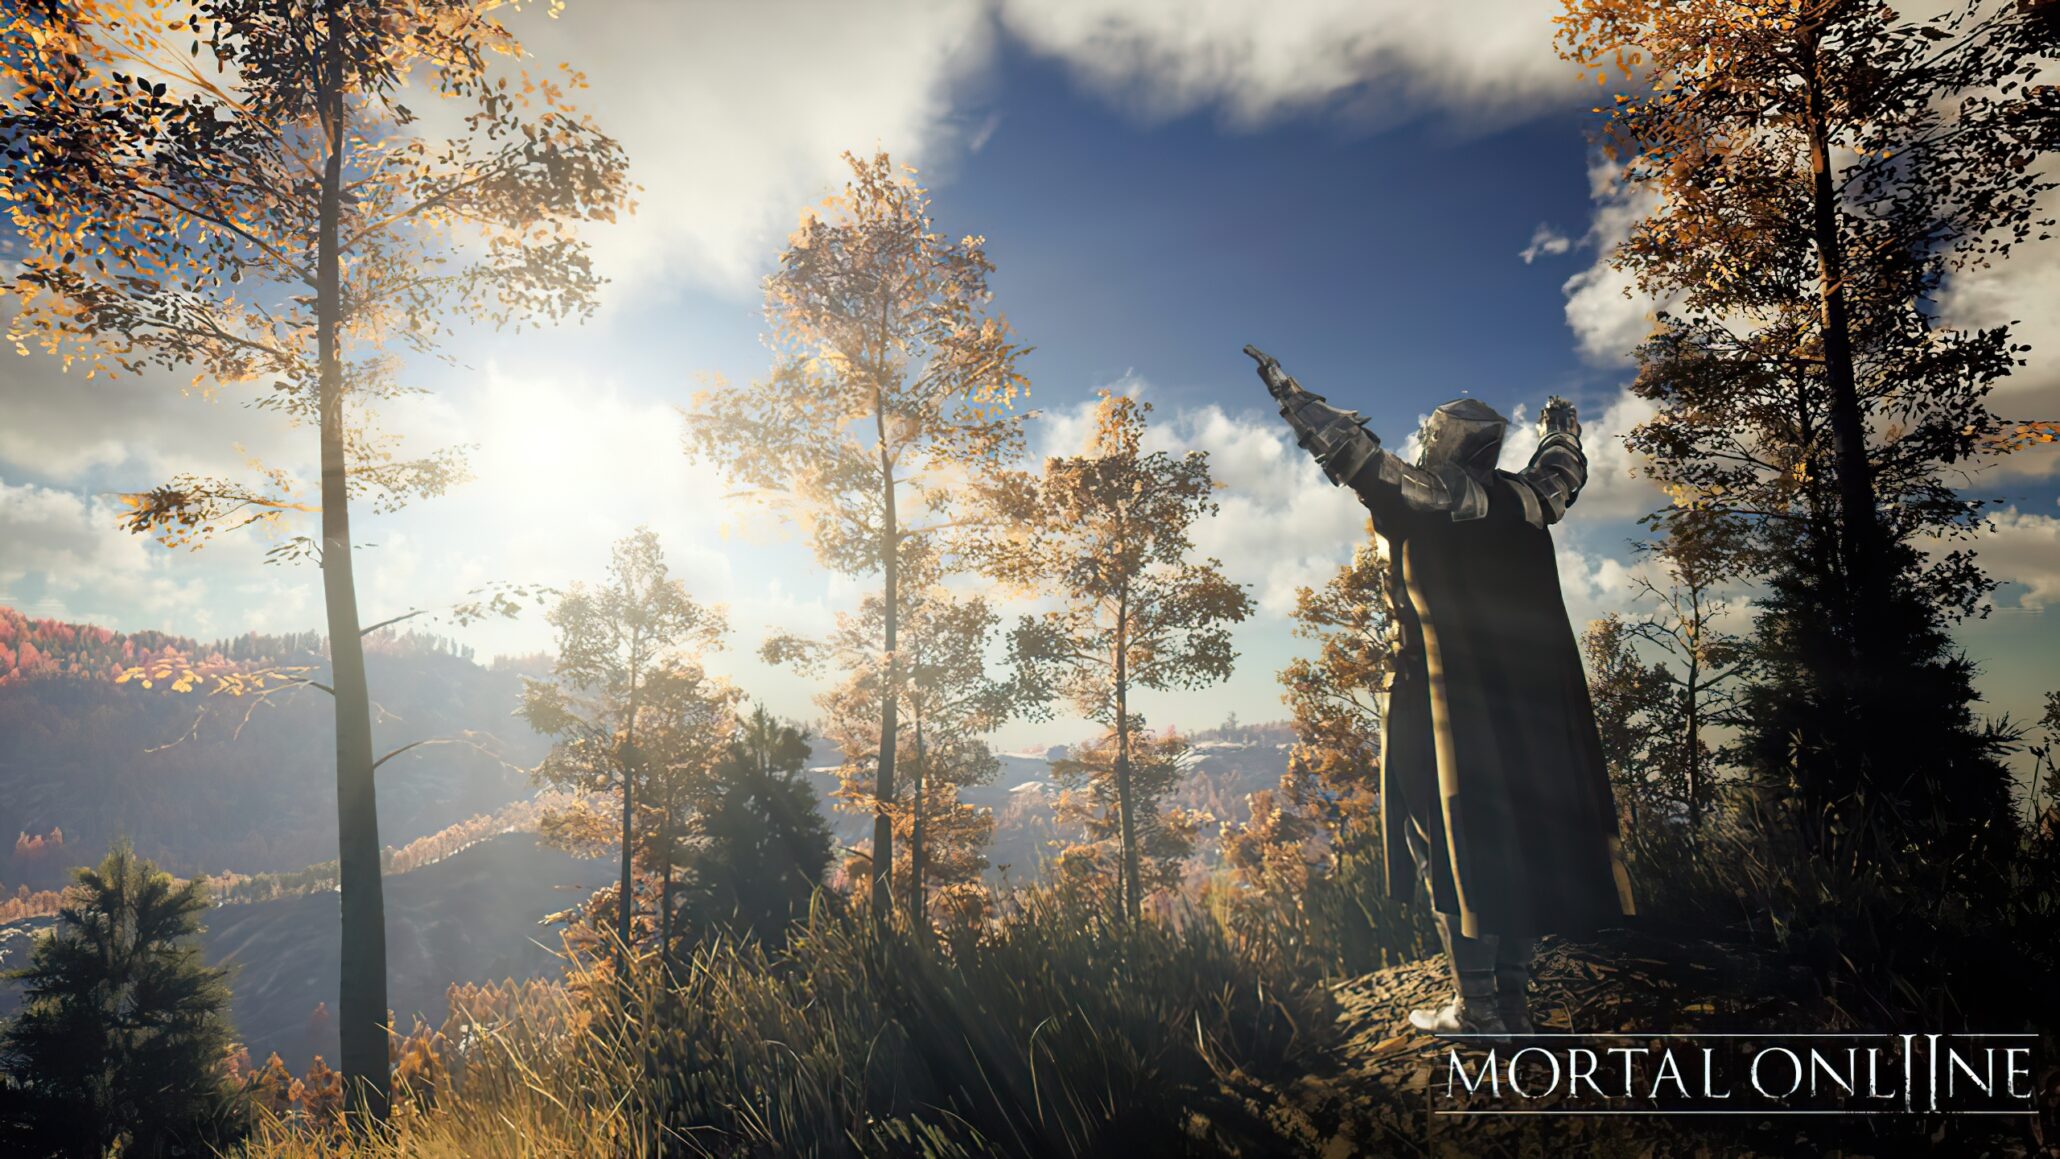 Mortal Online 2 screenshot